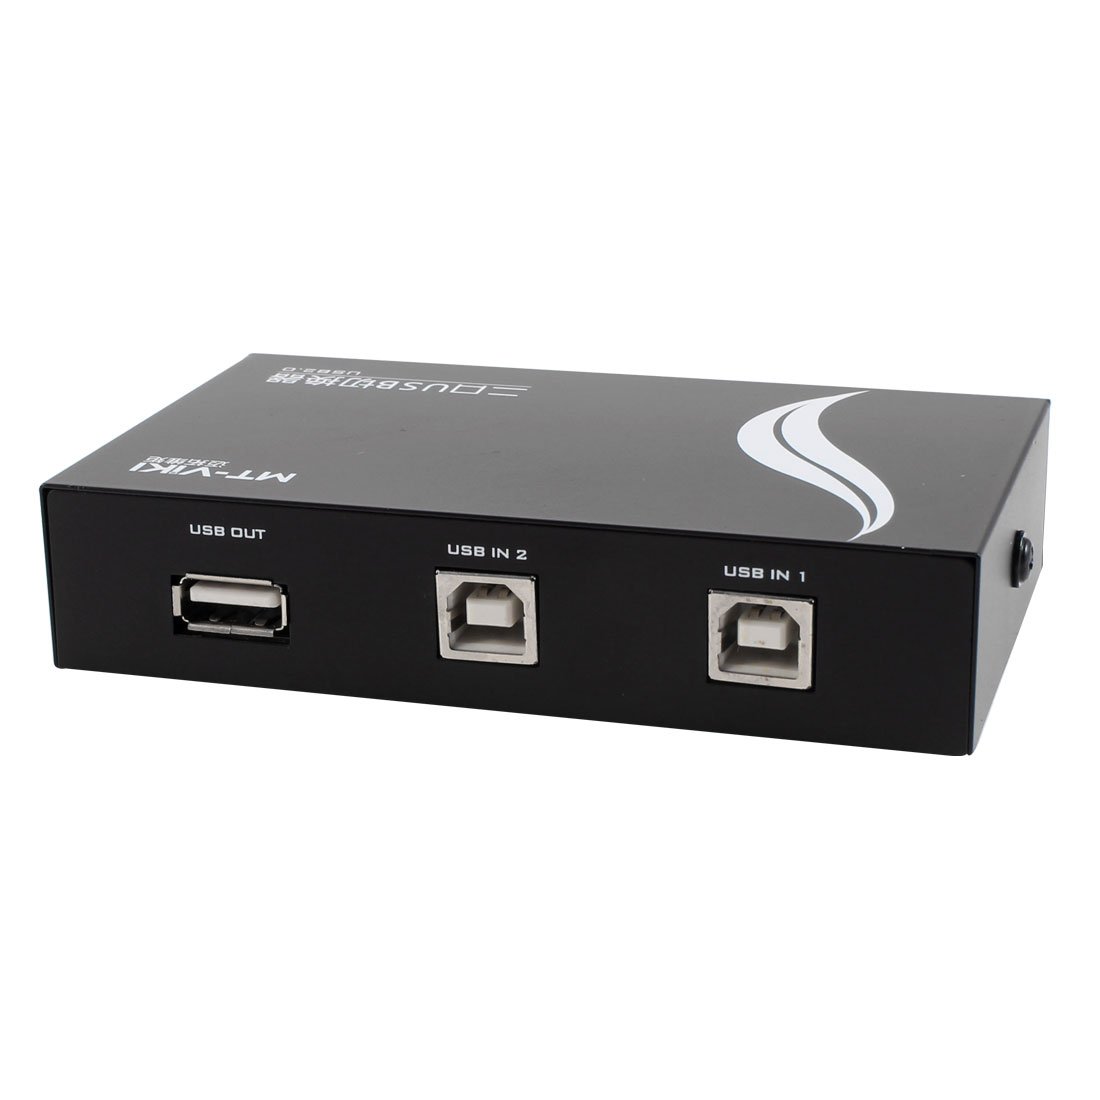  Commend1 USB 2.0 A   2 USB B  2  Shareing  kvm- 